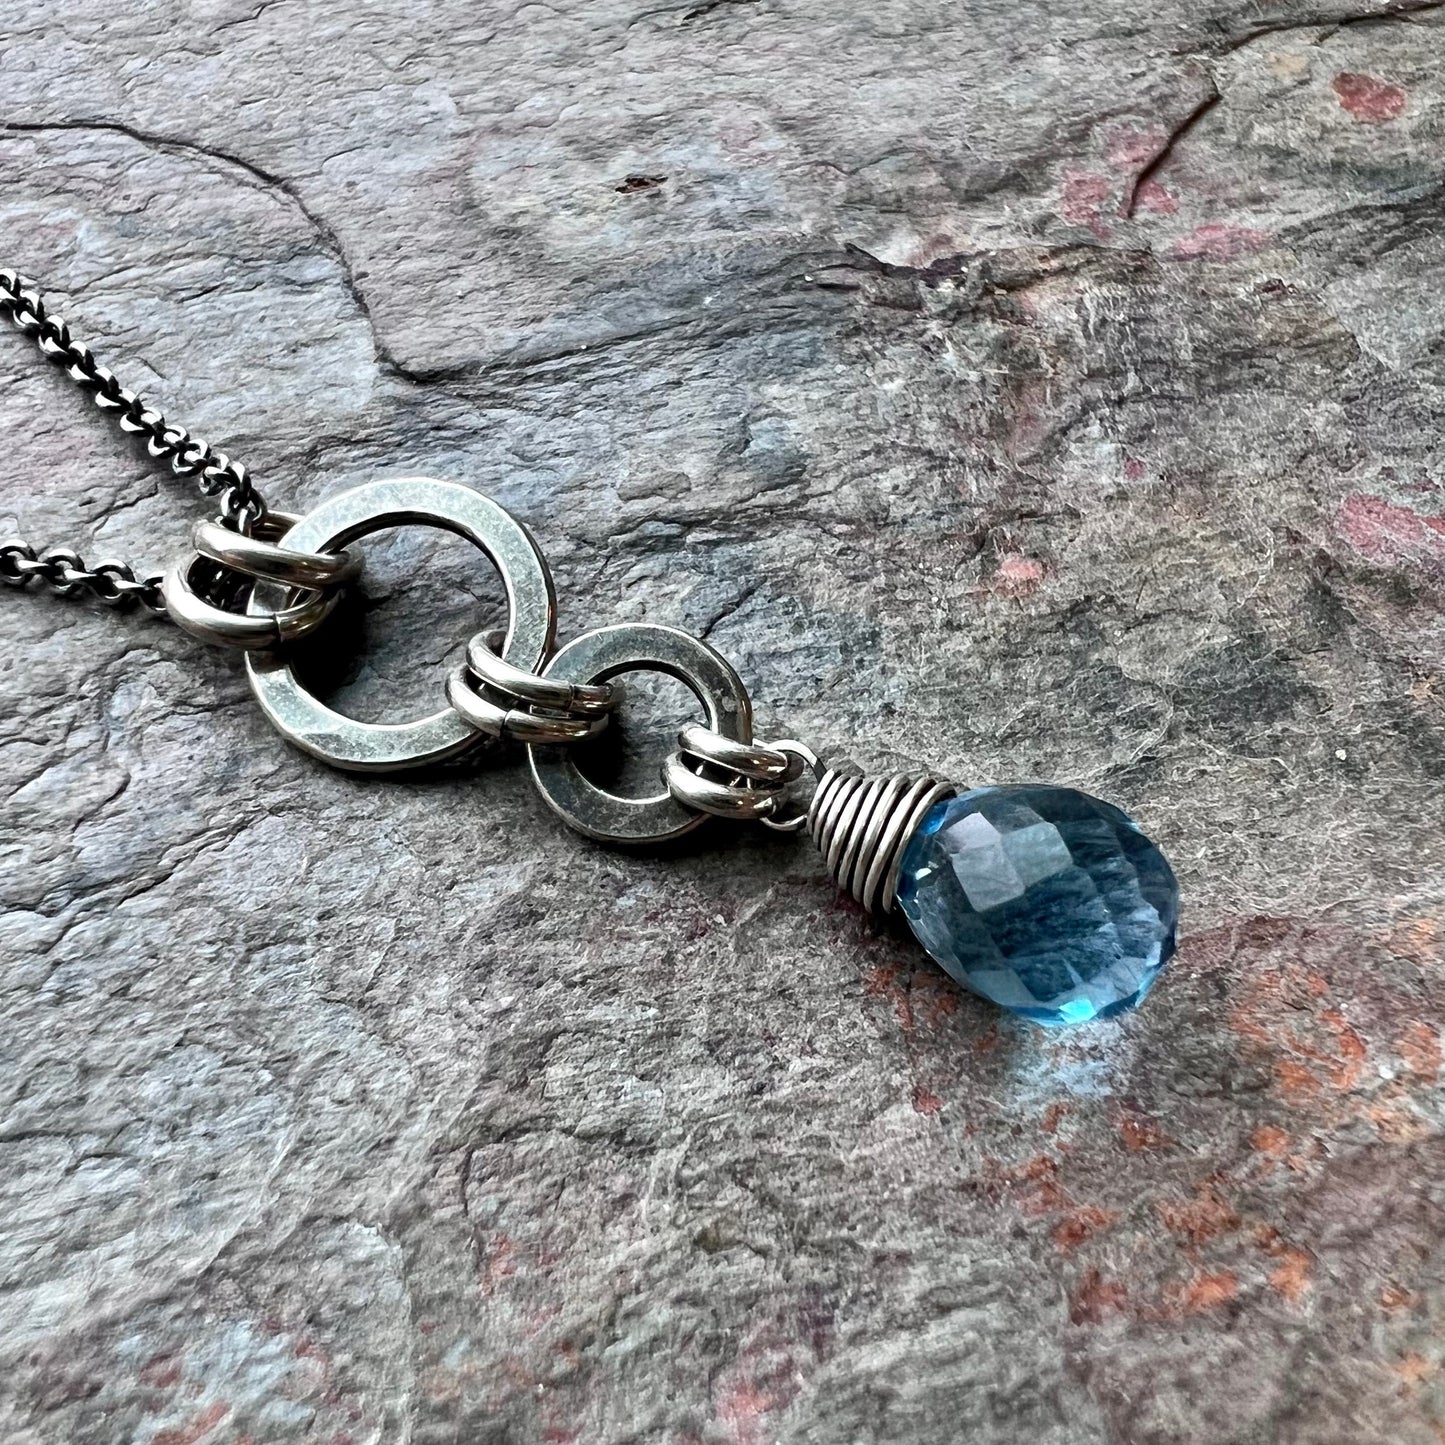 Sky Blue Quartz and Sterling Silver Pendant Necklace